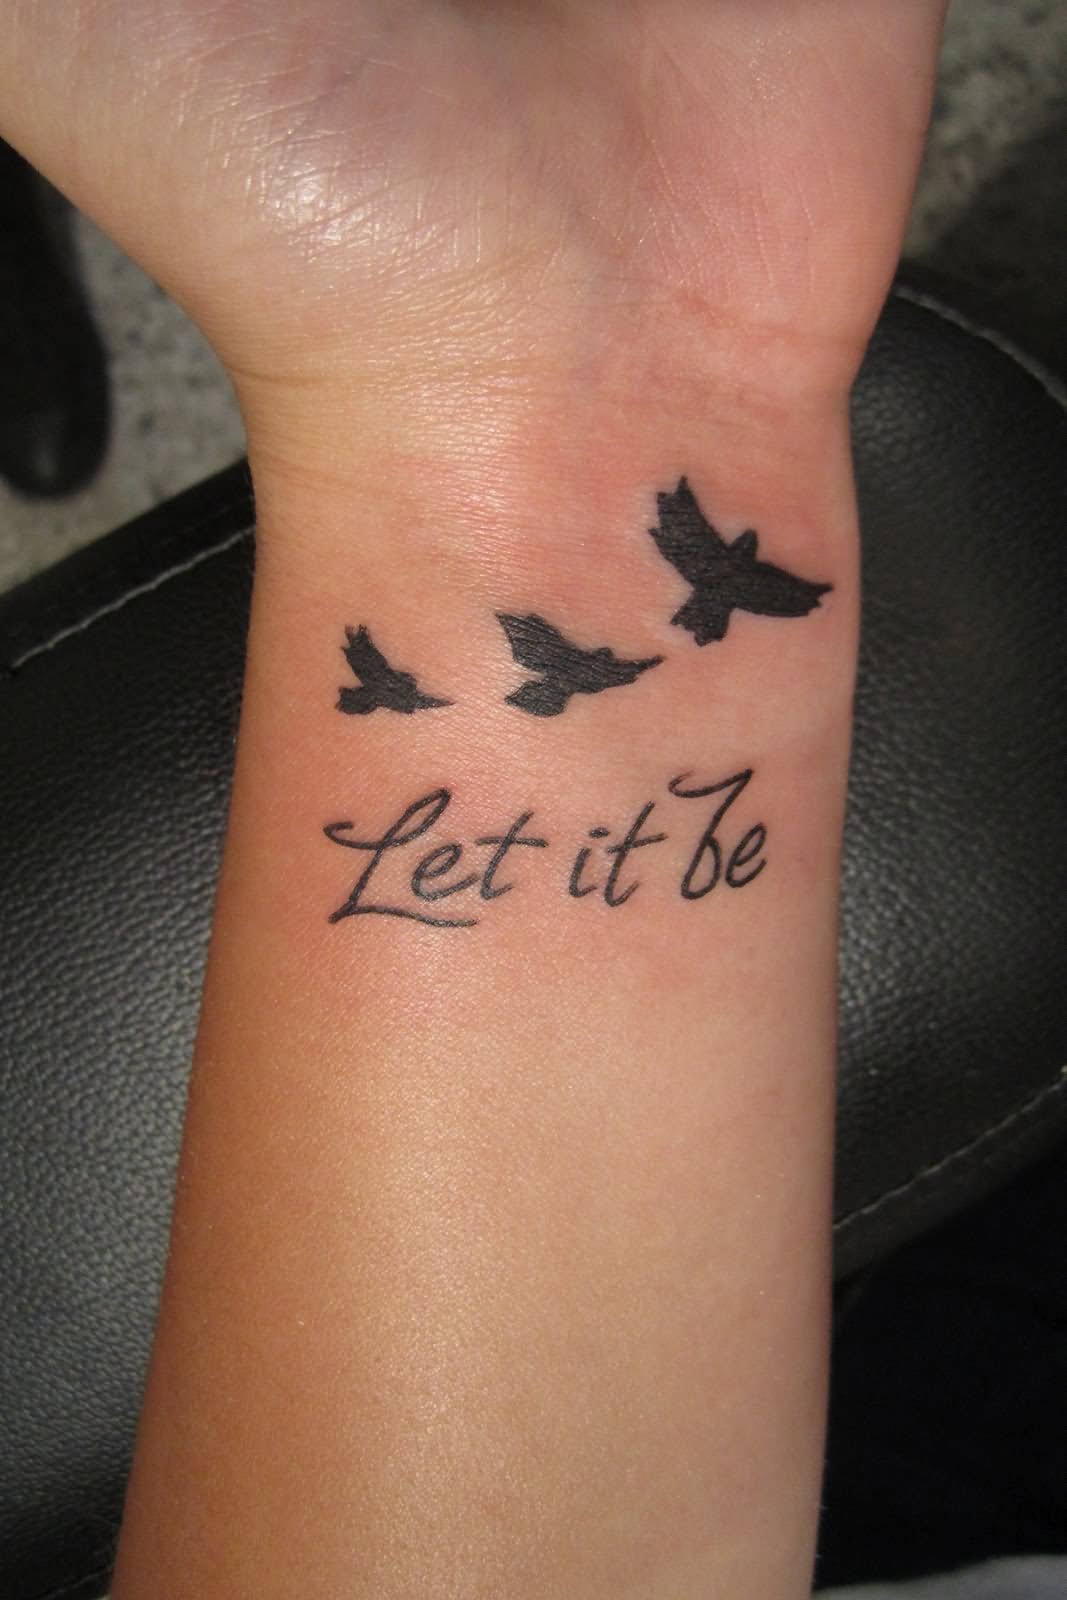 Let It Be - Three Flying Birds Tattoo On Wrist